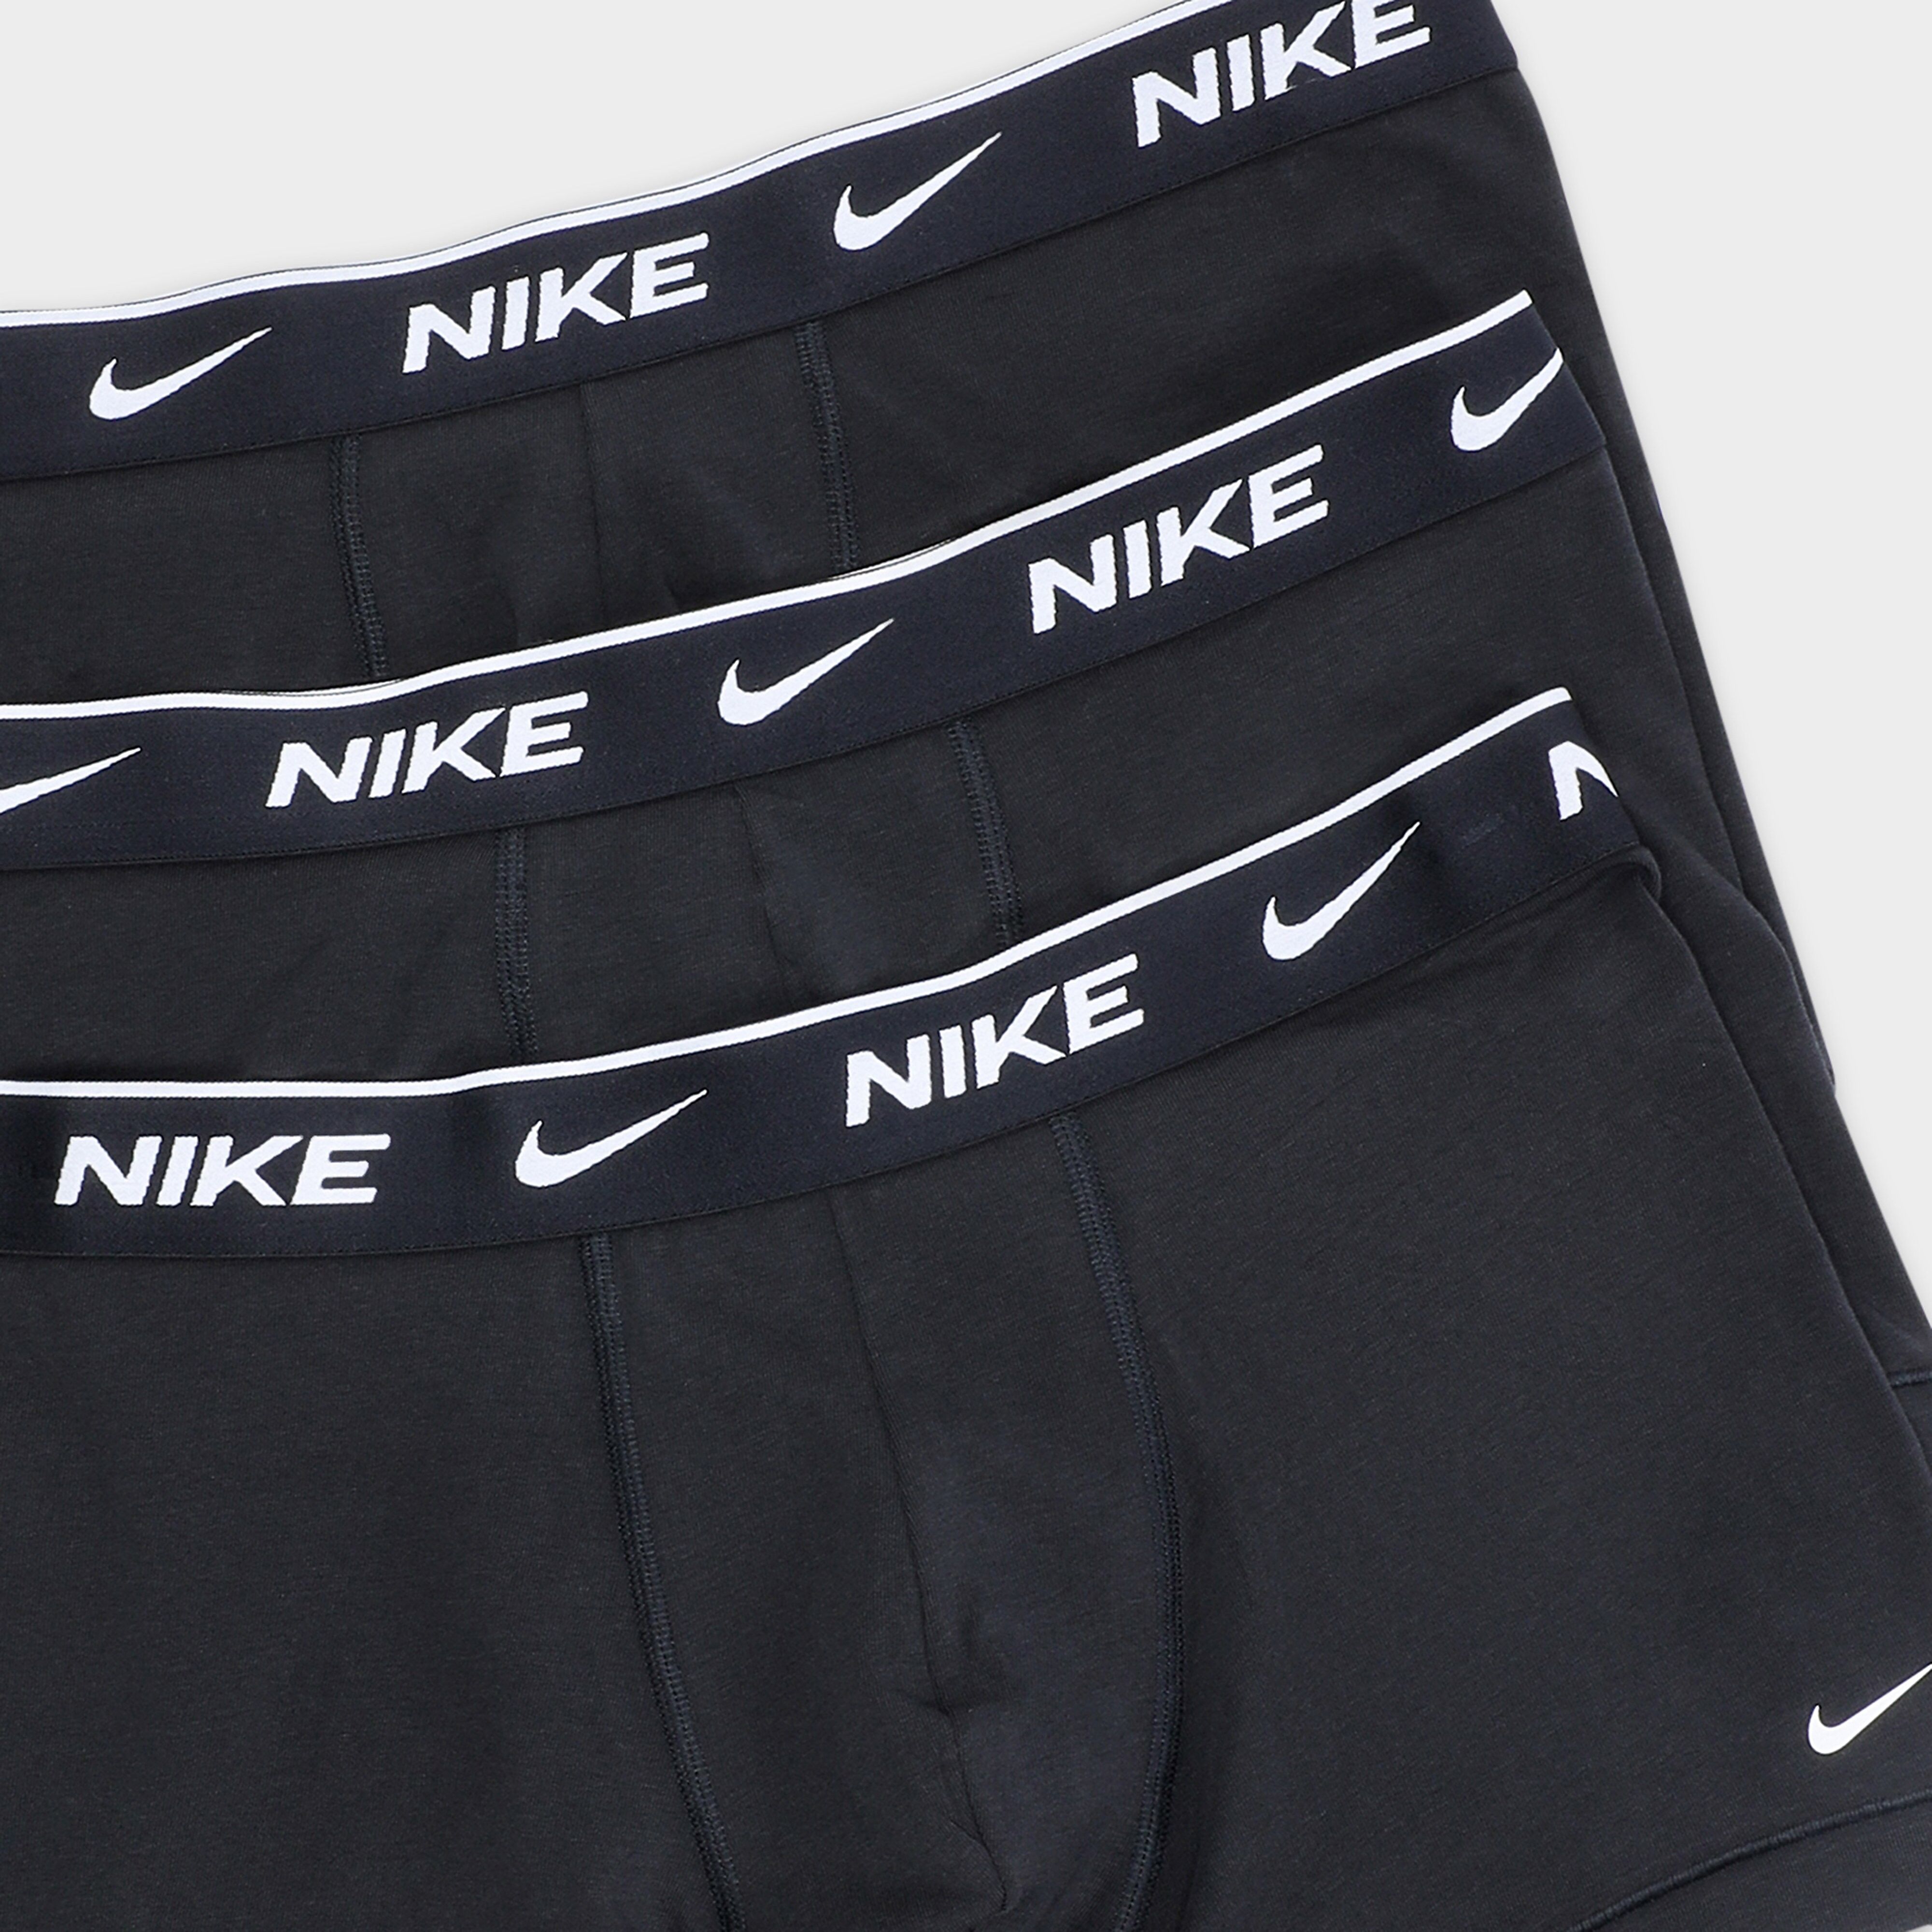 Nike 3 Pack Trunks - Black  size: M